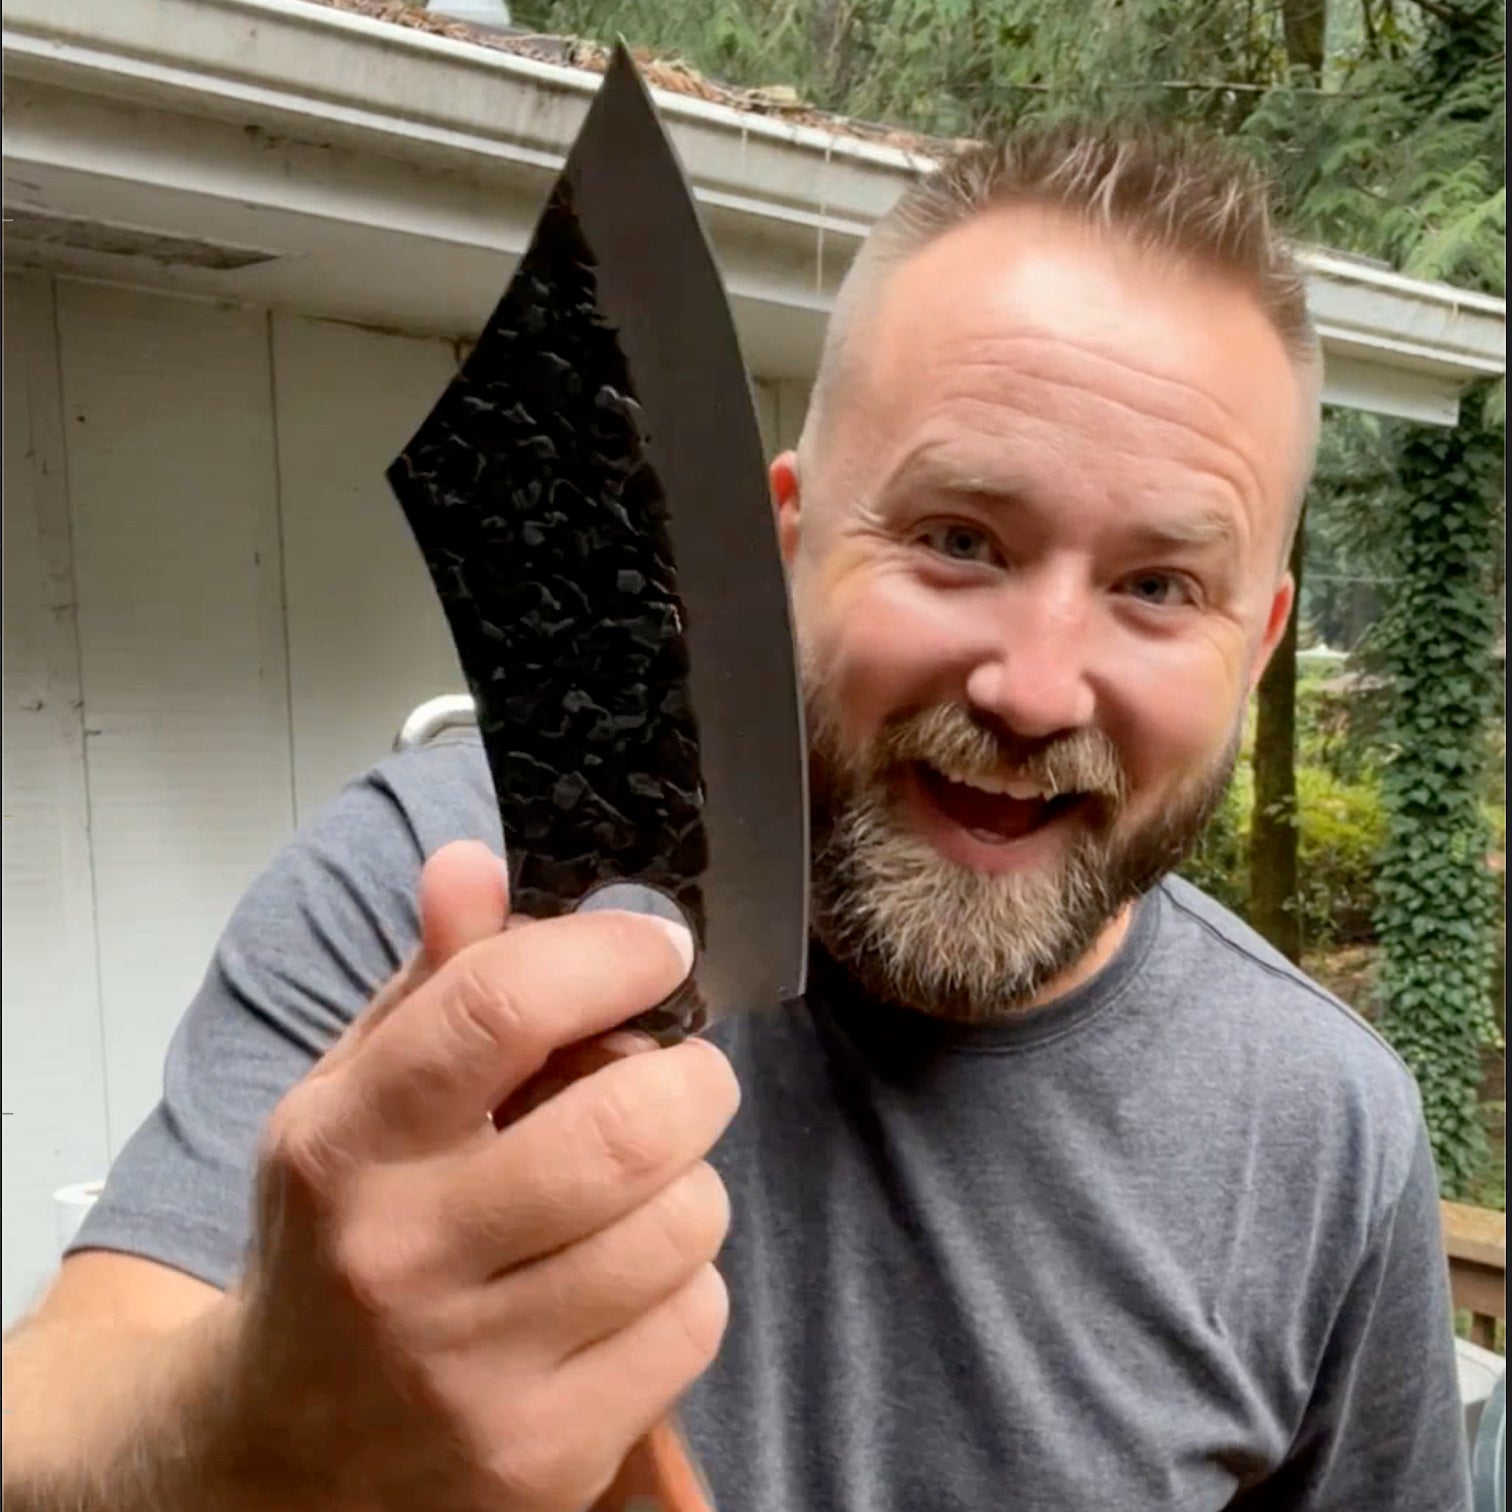 Viking Knife, NorthernKnife